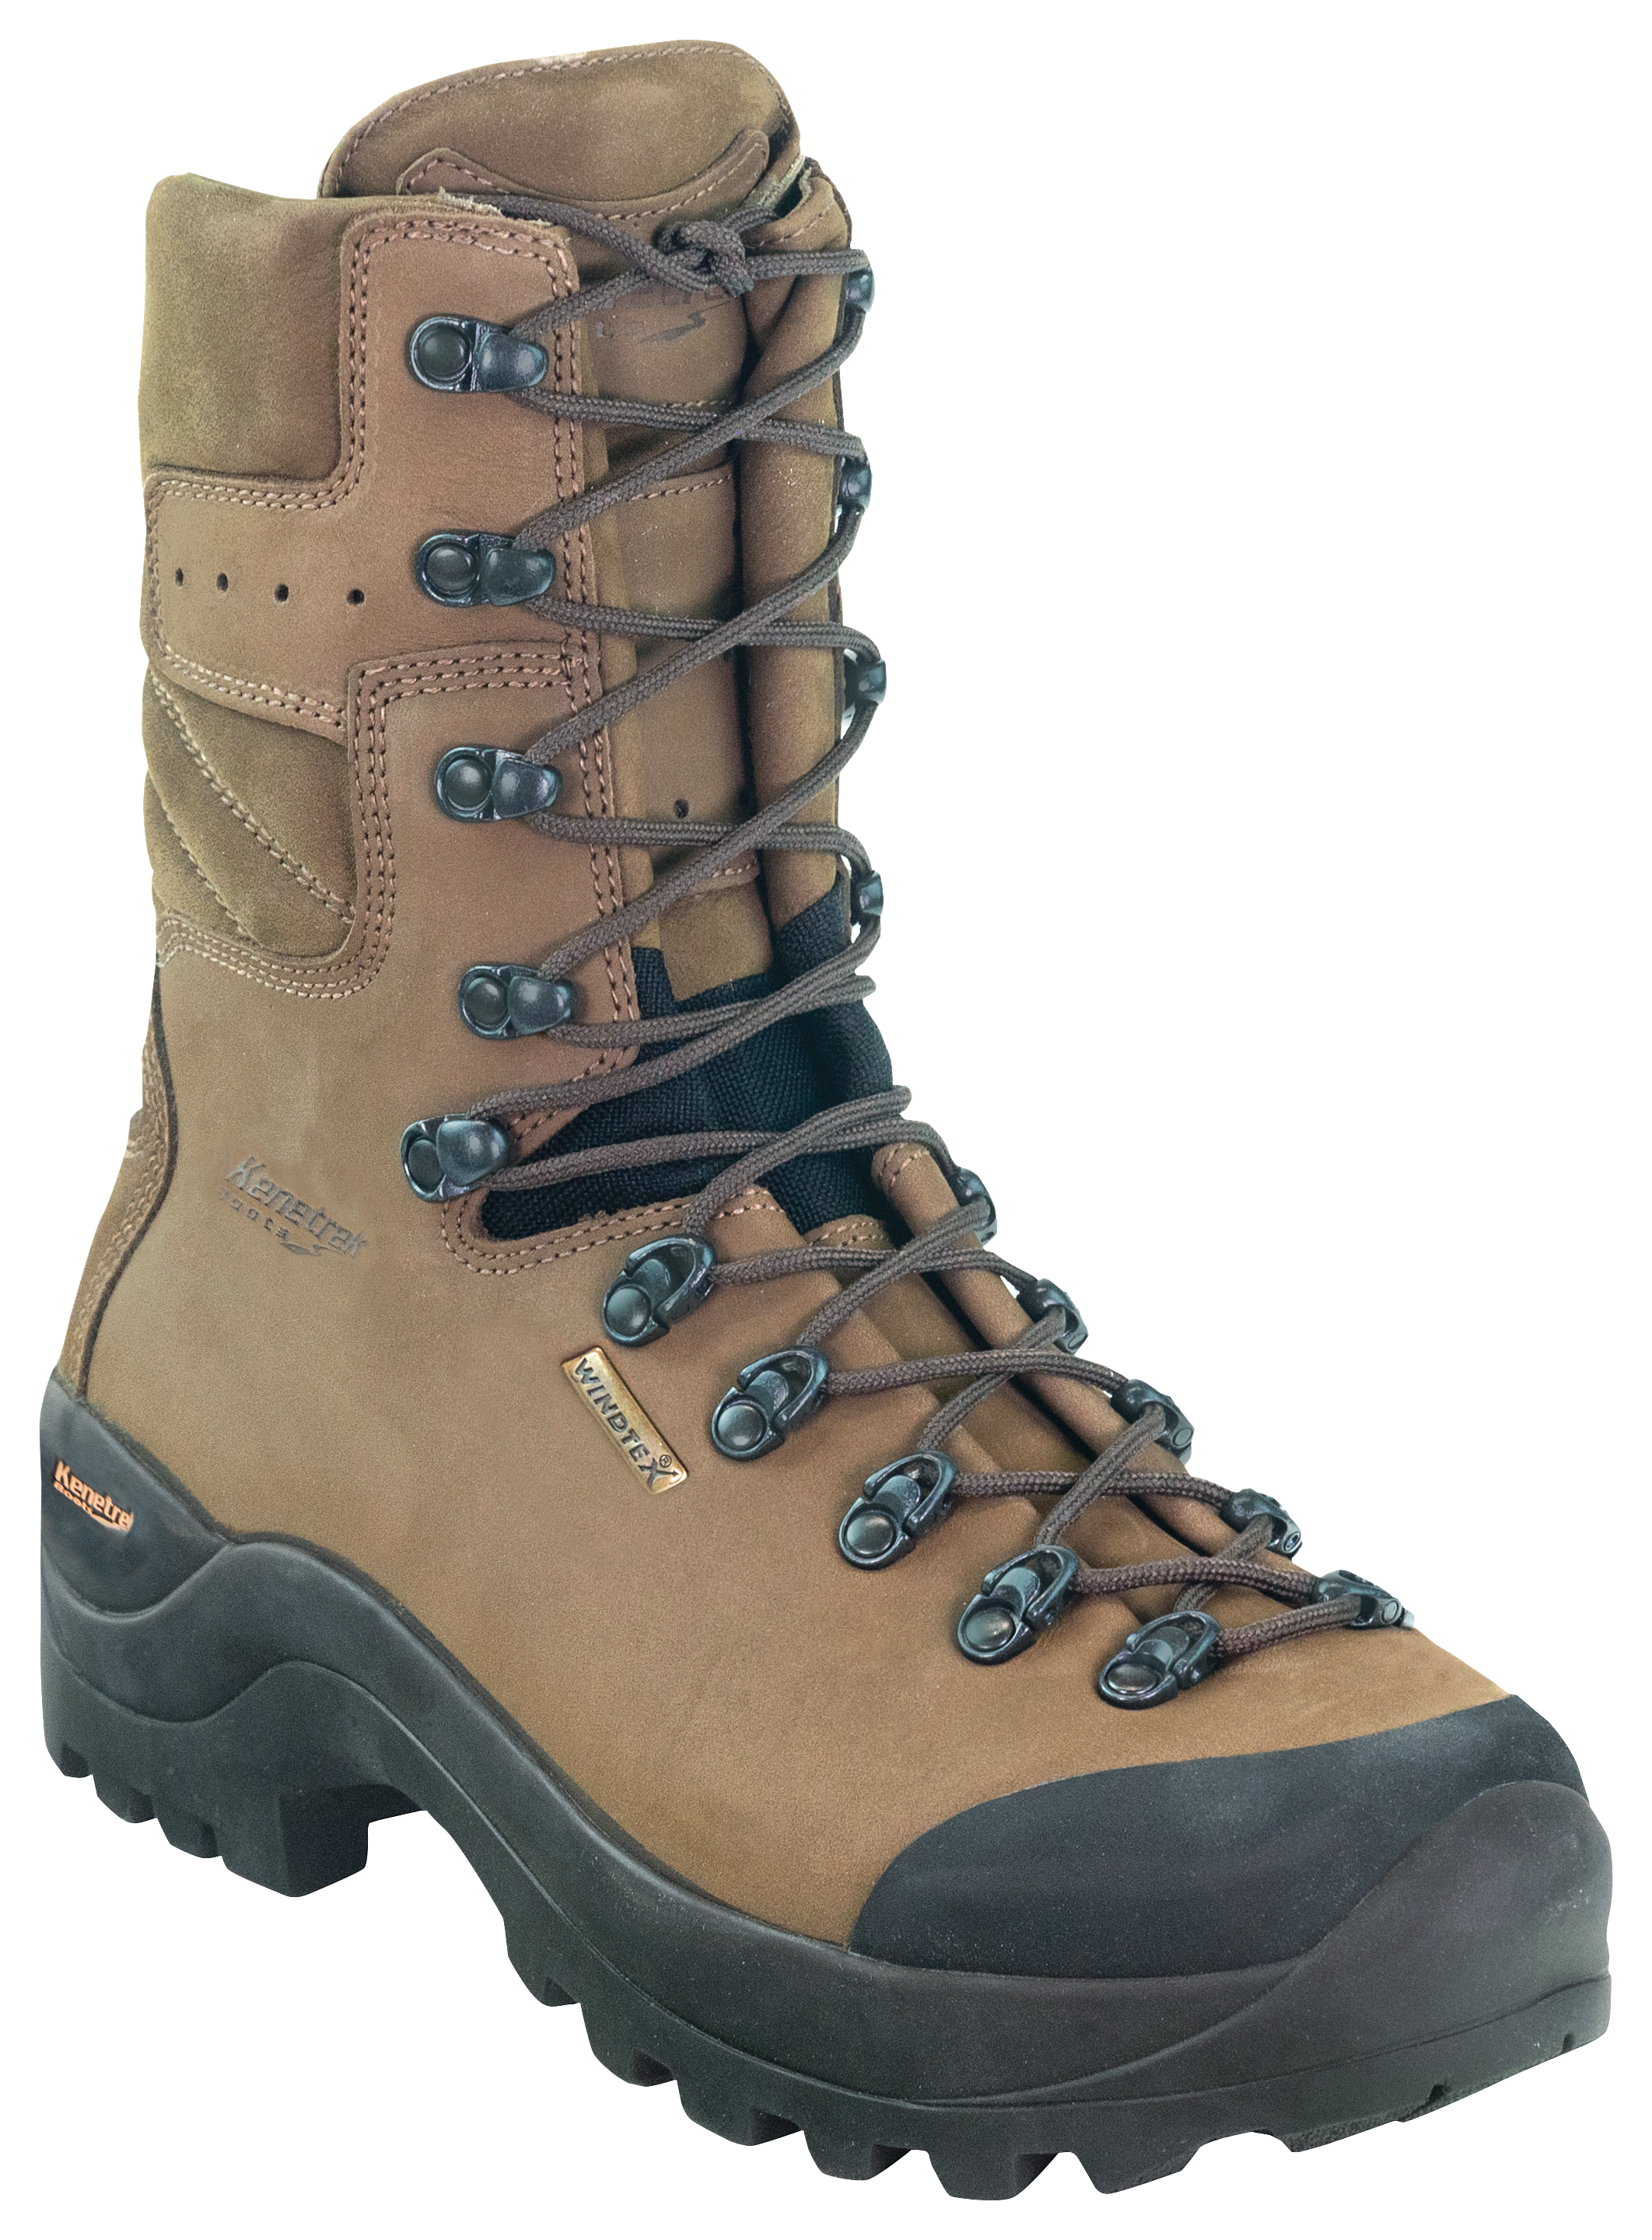 Kenetrek Mountain Guide Waterproof Hunting Boots for Men - Brown - 9M